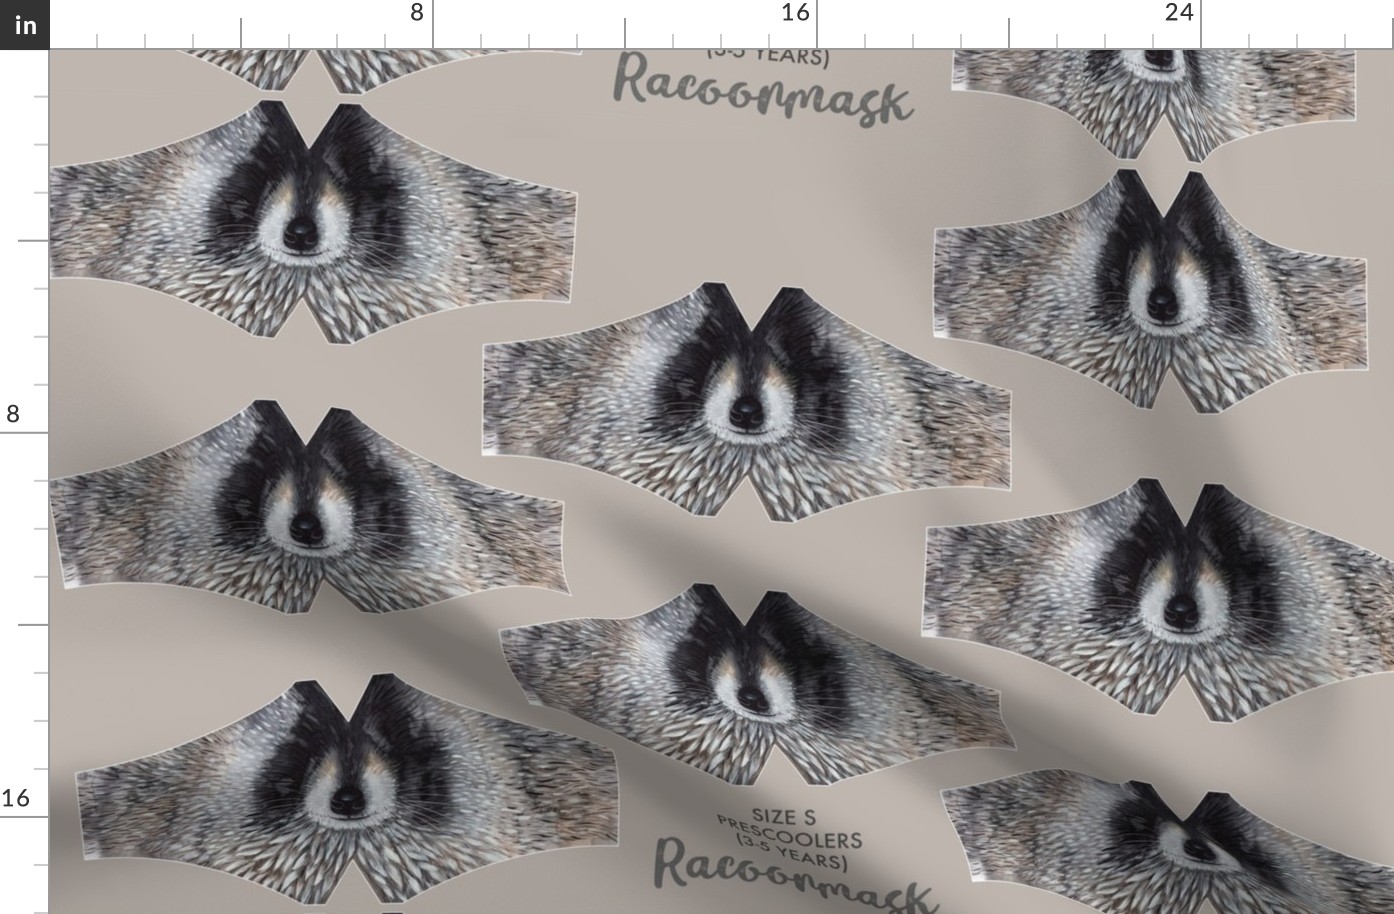 Racoonmask Size S - preschooler (3-5 years), racoon face mask